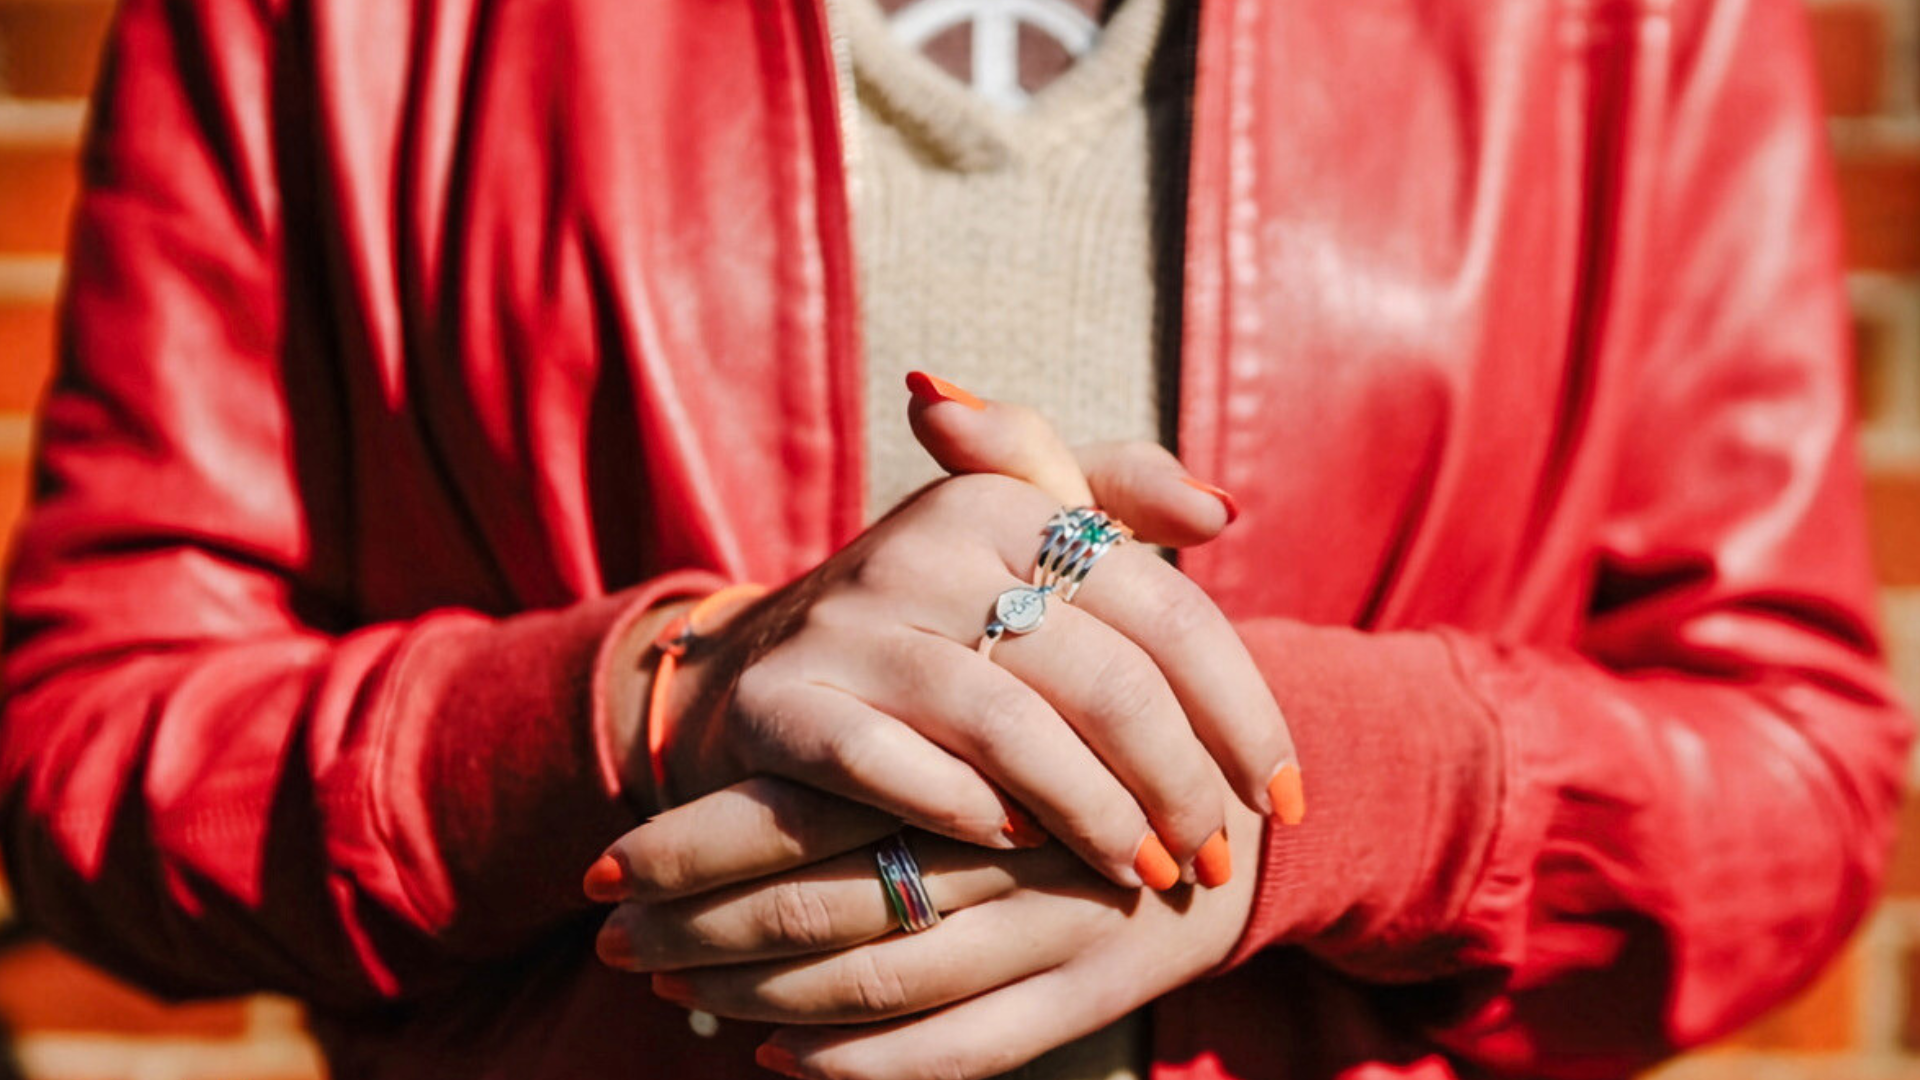 Orange nails and red jacket